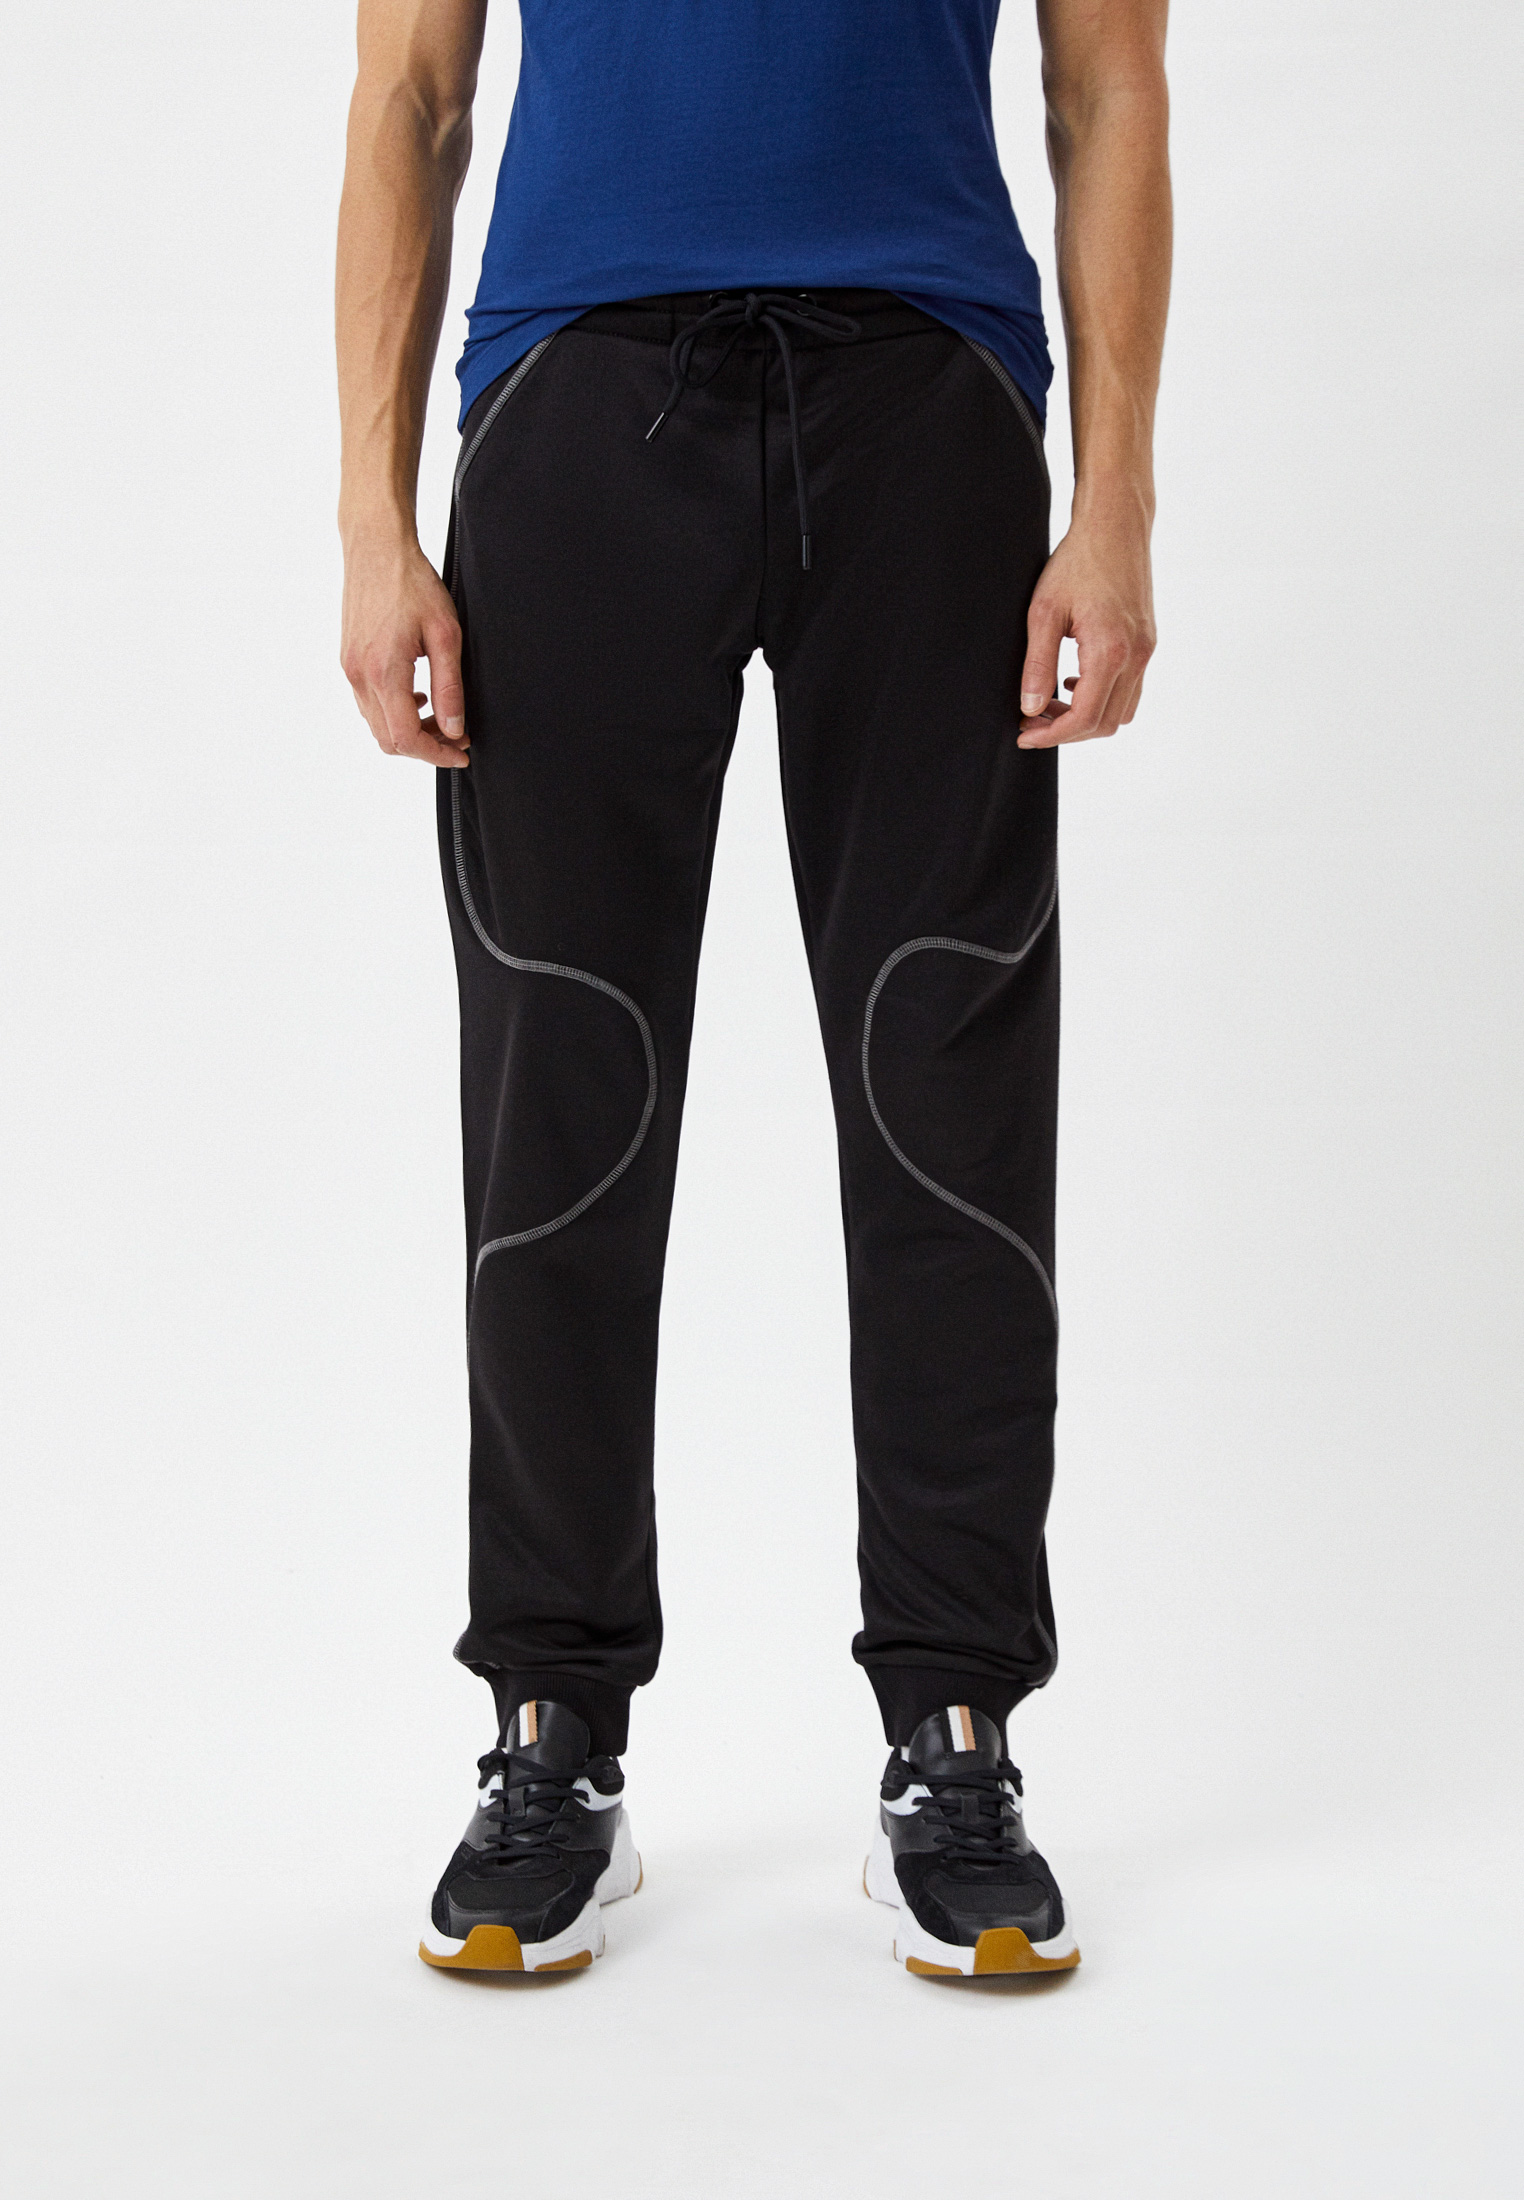 Мужские спортивные брюки Bikkembergs (Биккембергс) C11397PM4190: изображение 1